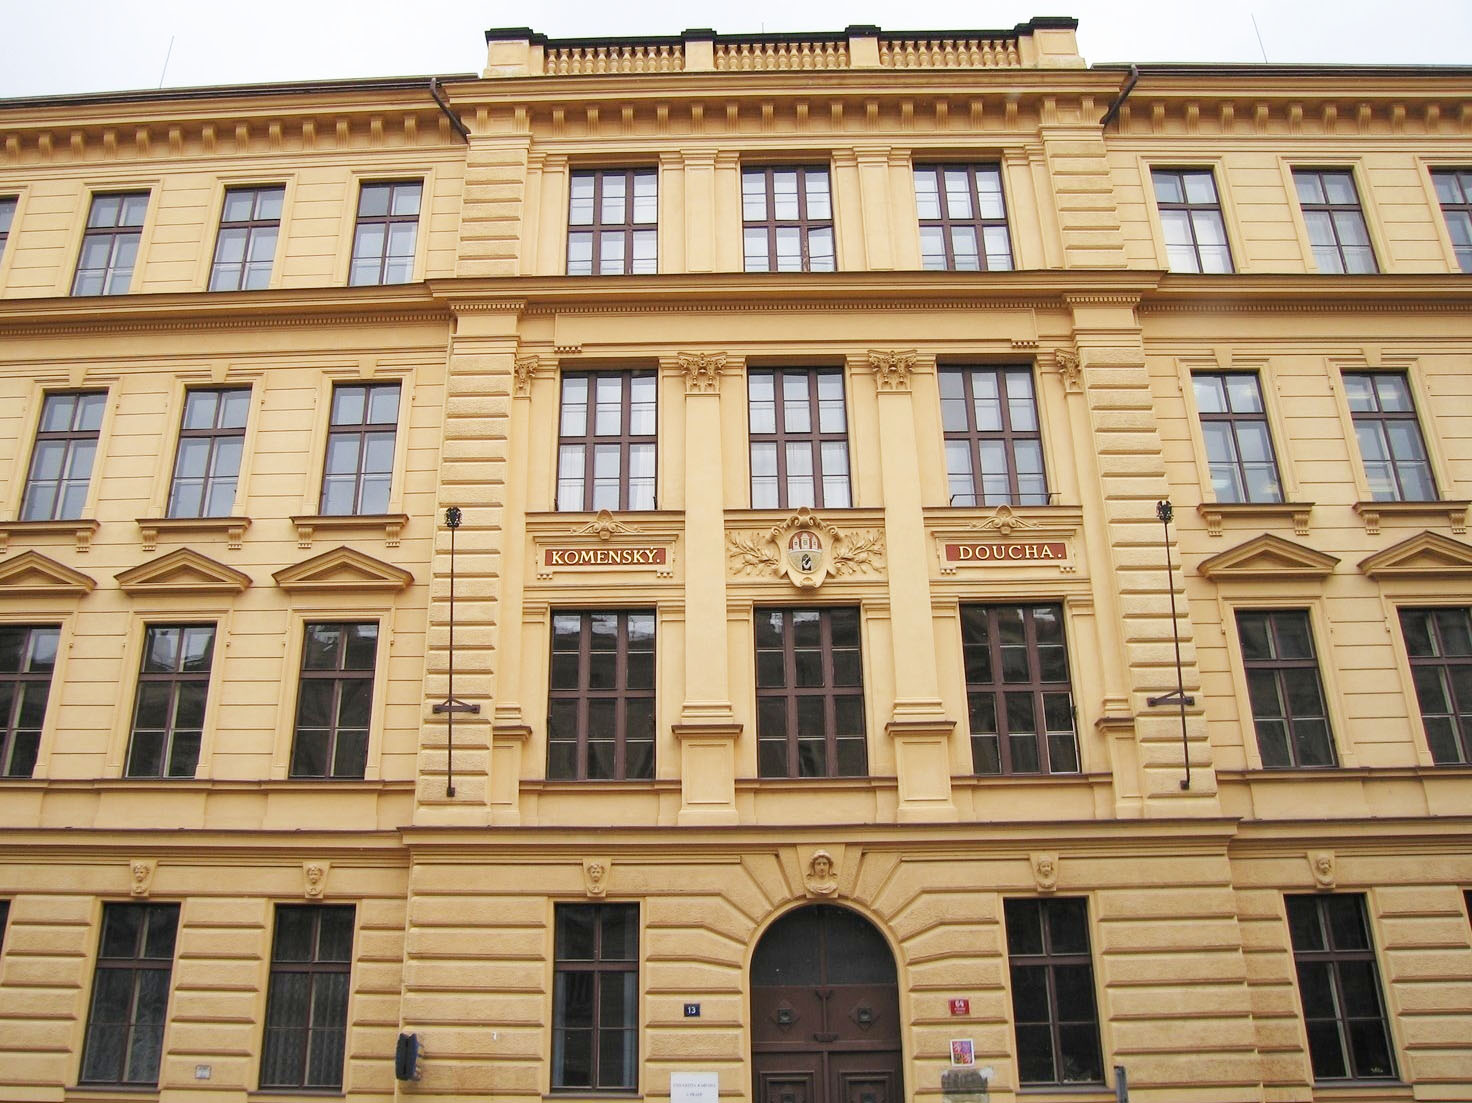 Charles University in Prague, Czech Republic.